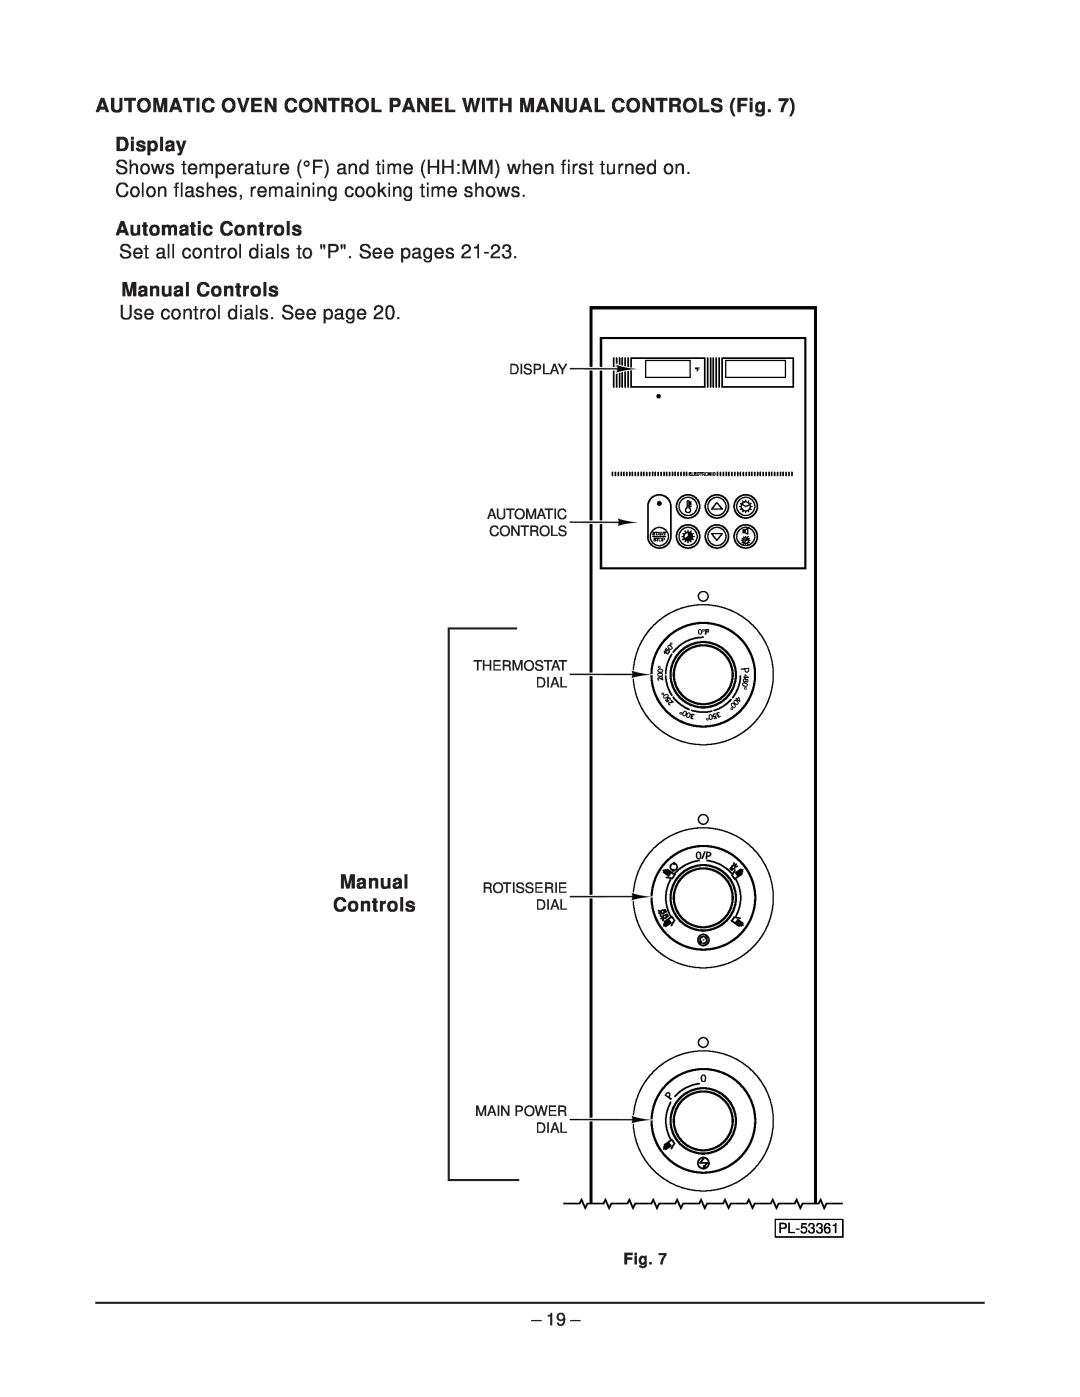 Hobart HR5 manual AUTOMATIC OVEN CONTROL PANEL WITH MANUAL CONTROLS Fig Display, Automatic Controls, Manual Controls 